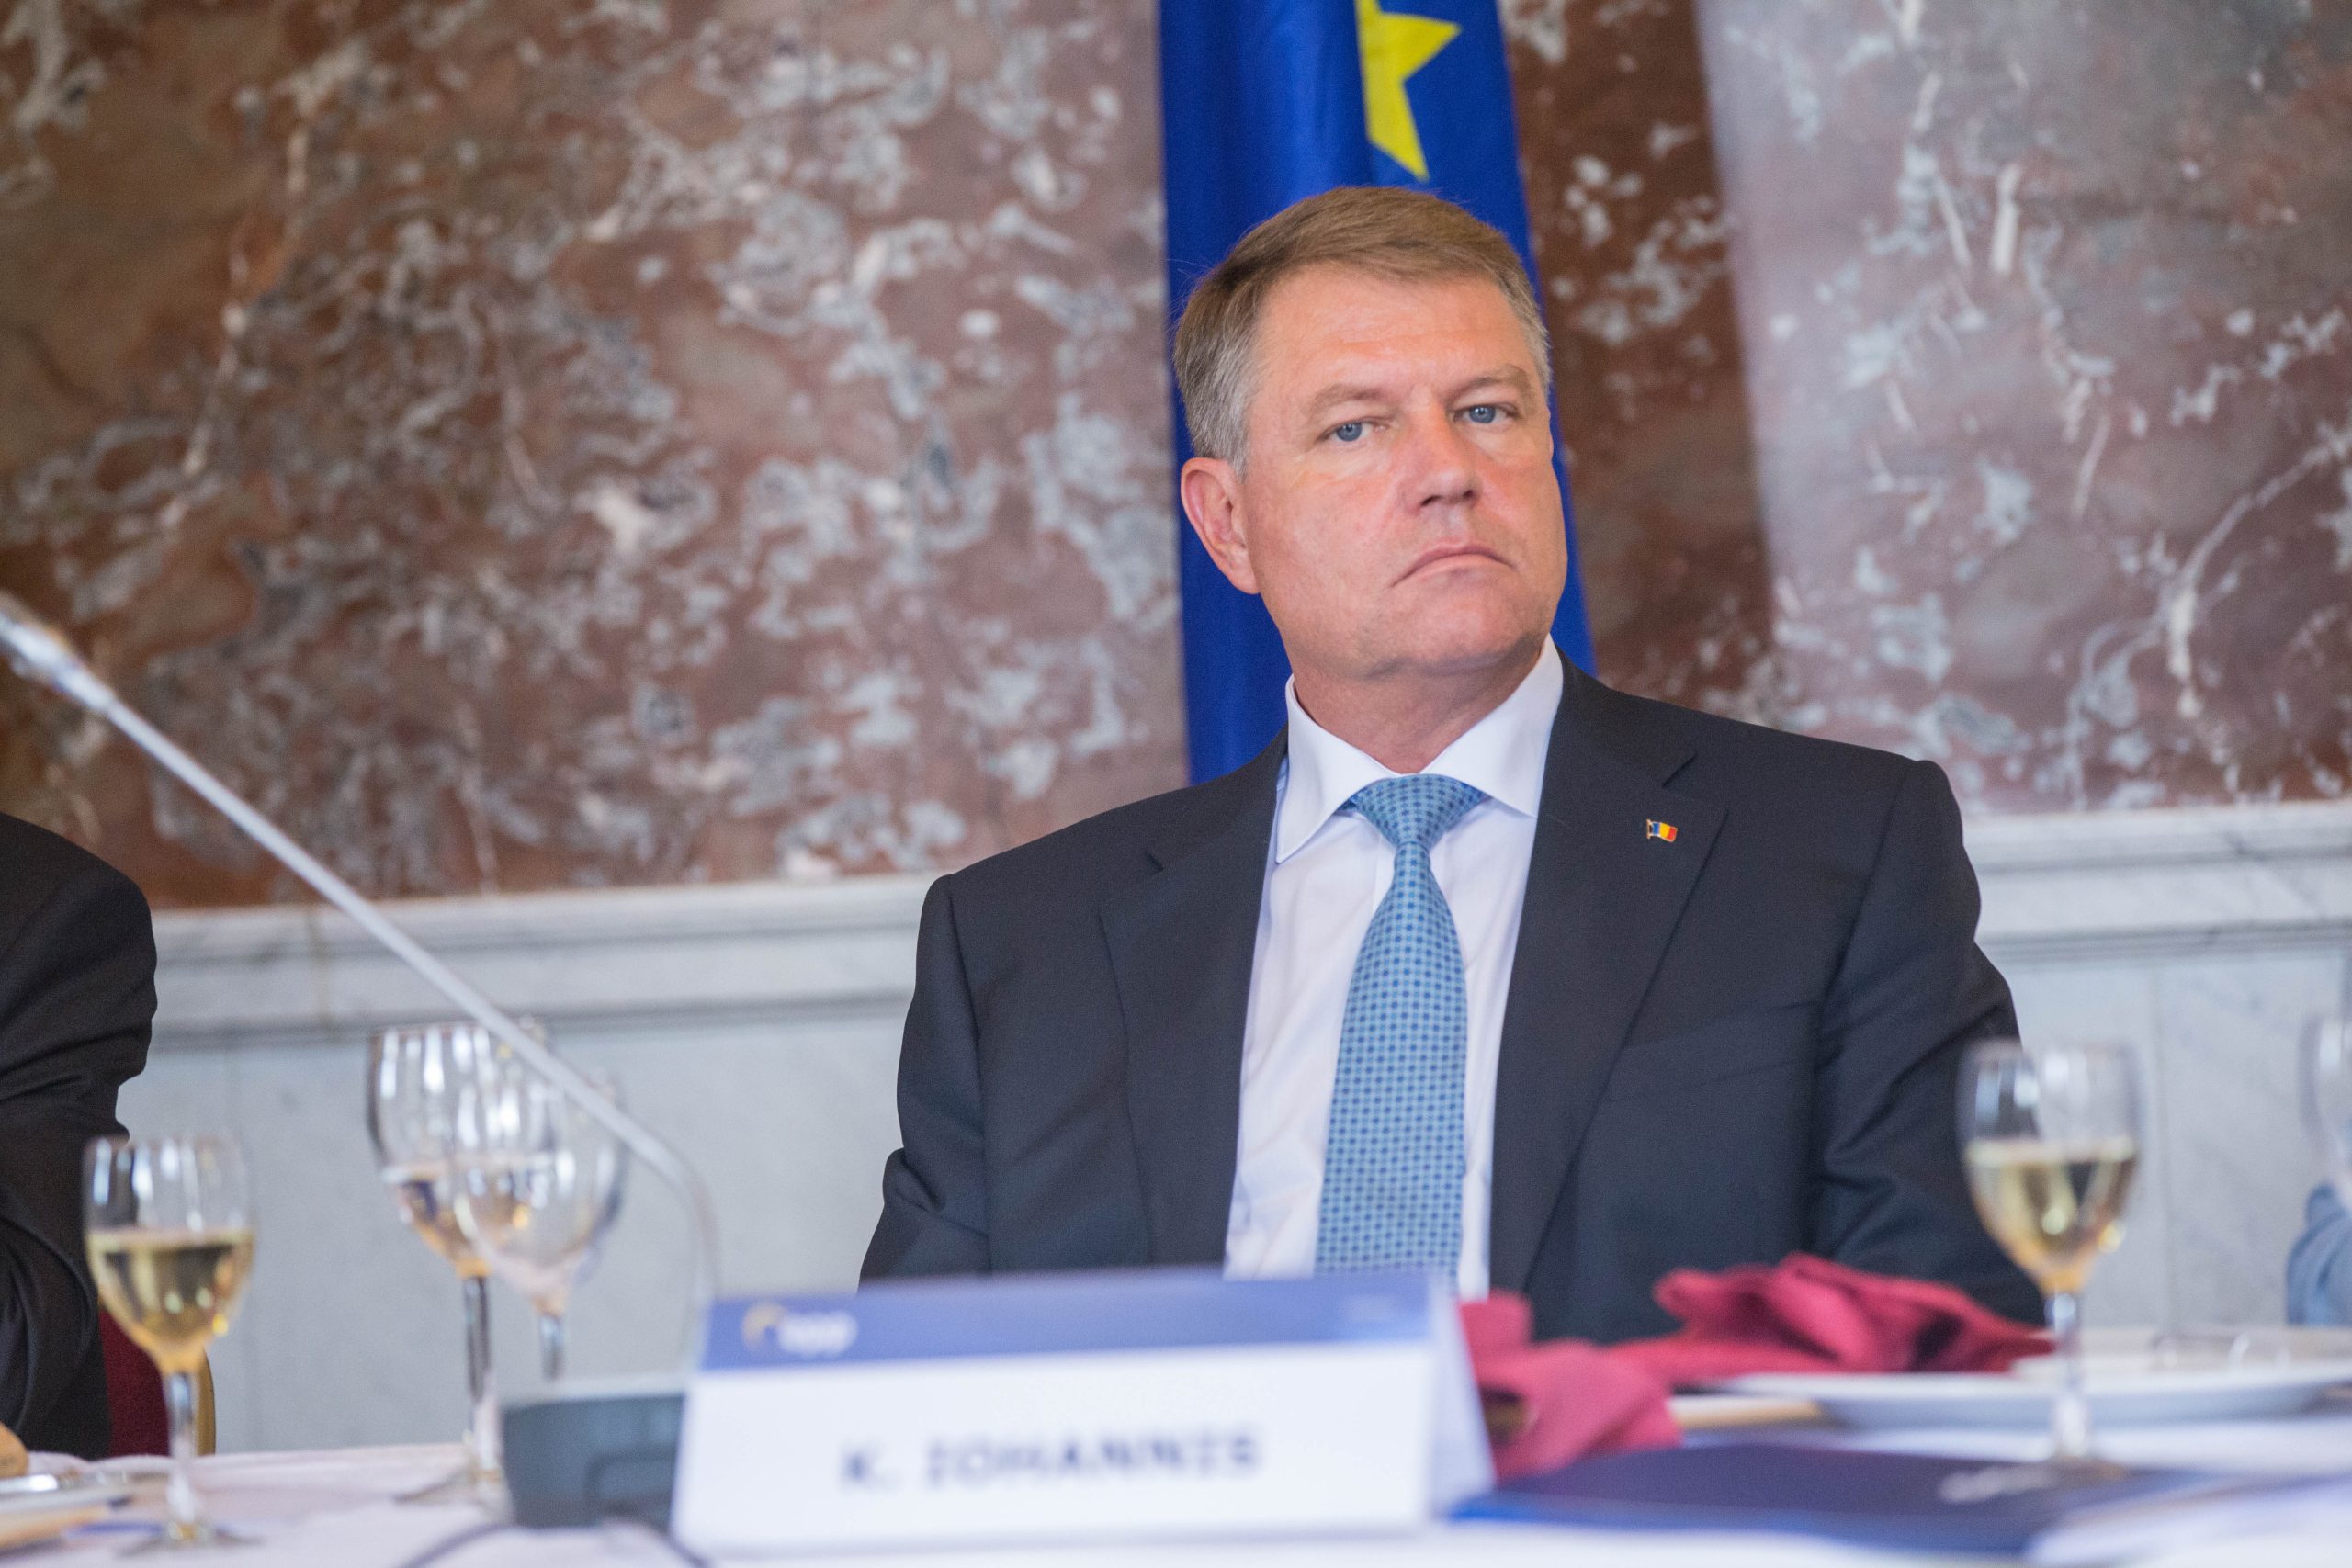 Romanian President Klaus Iohannis